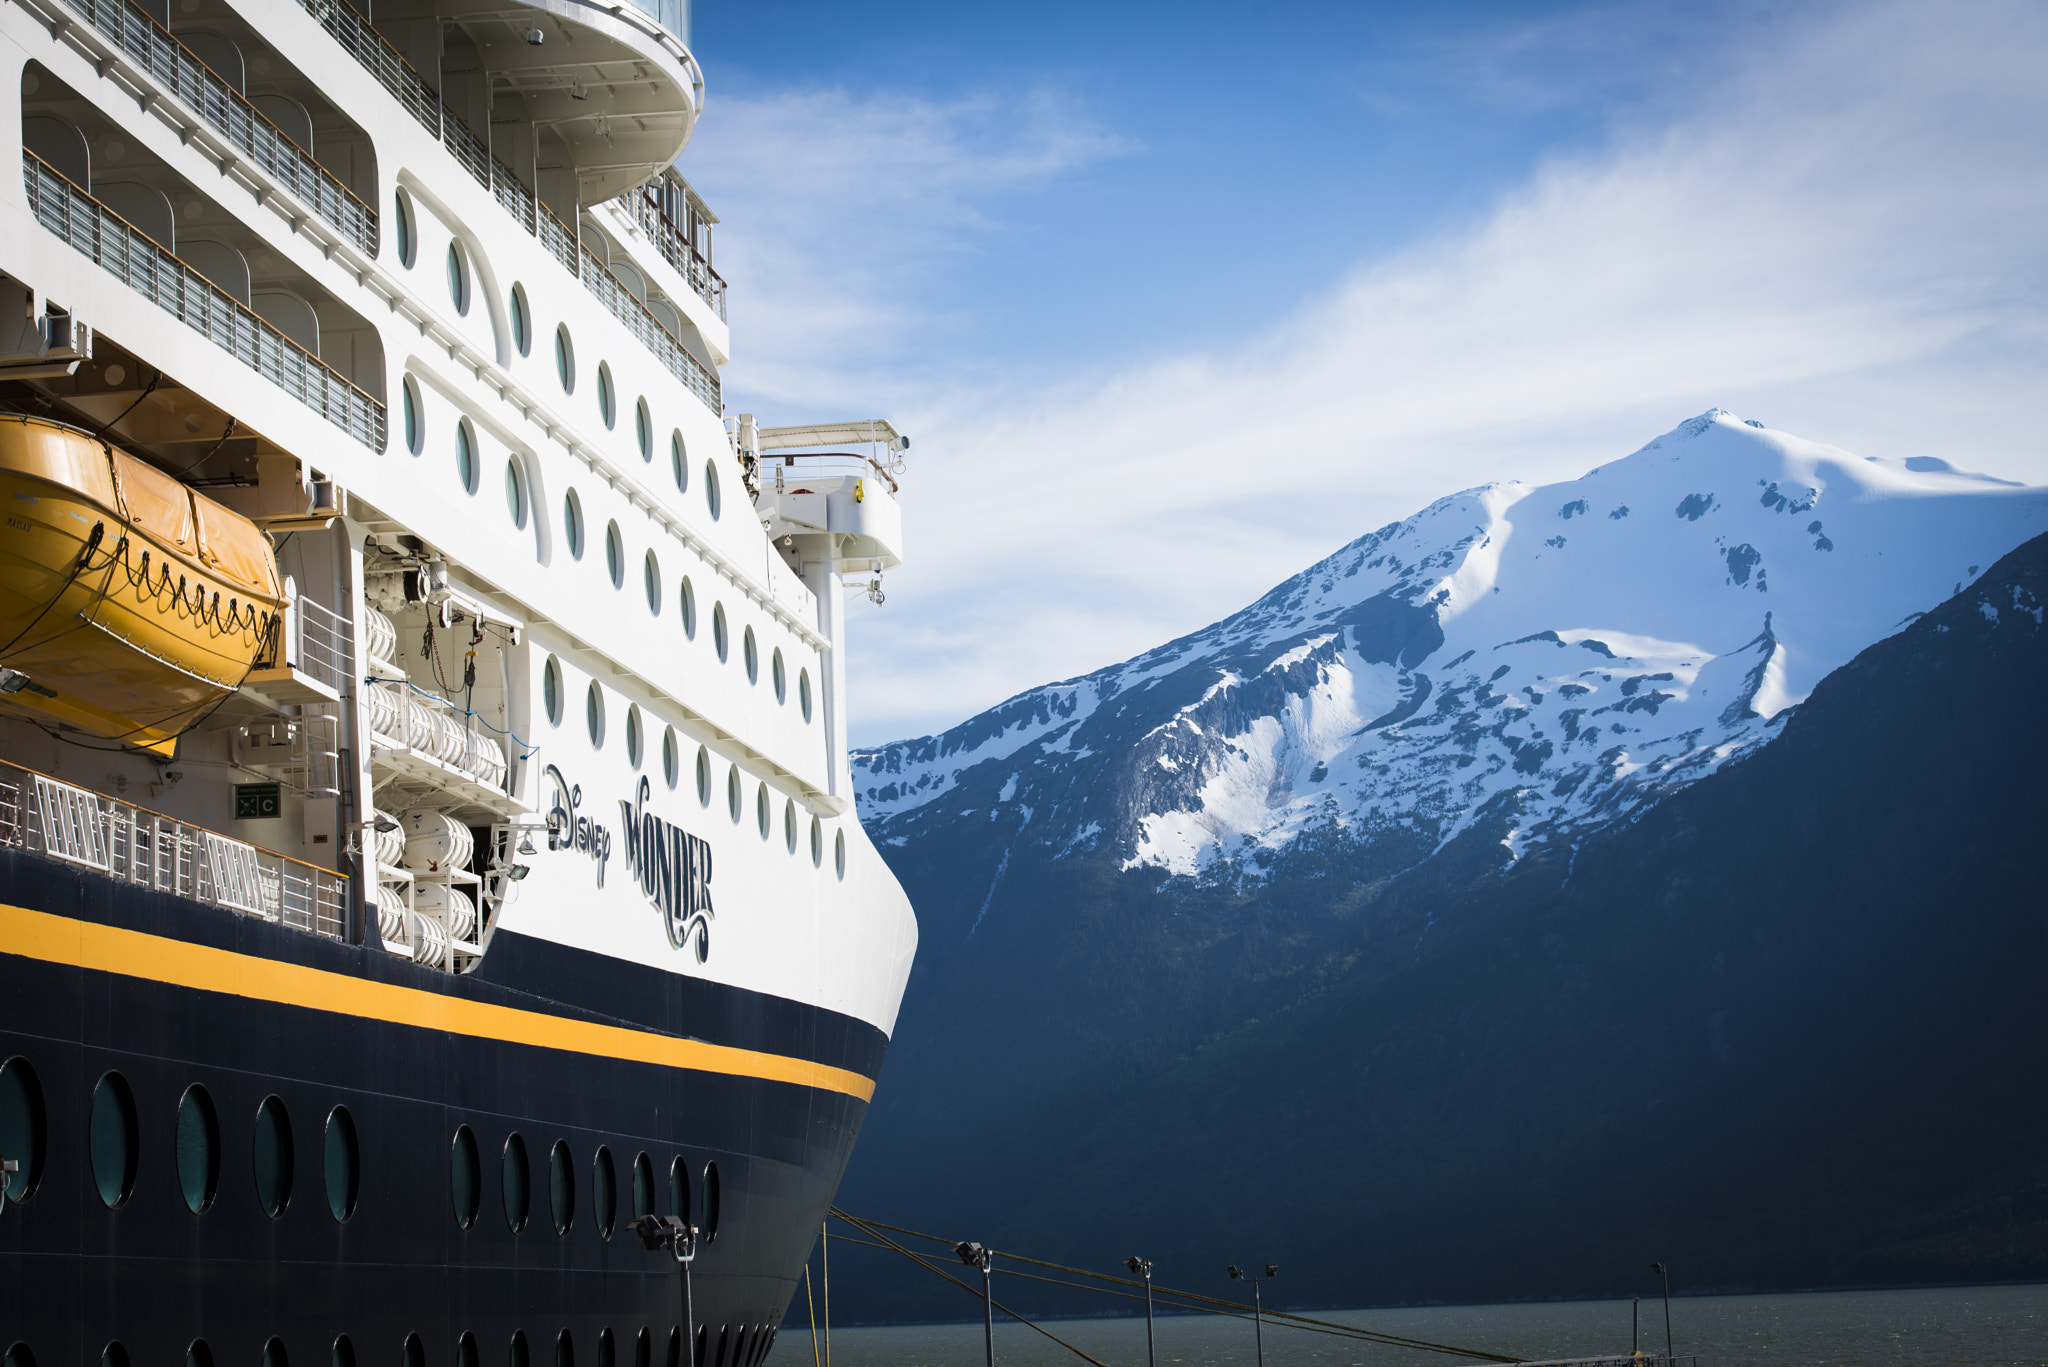 Disney Cruise Lines " Disney Wonder " in Alaska by Andrew Kolstad